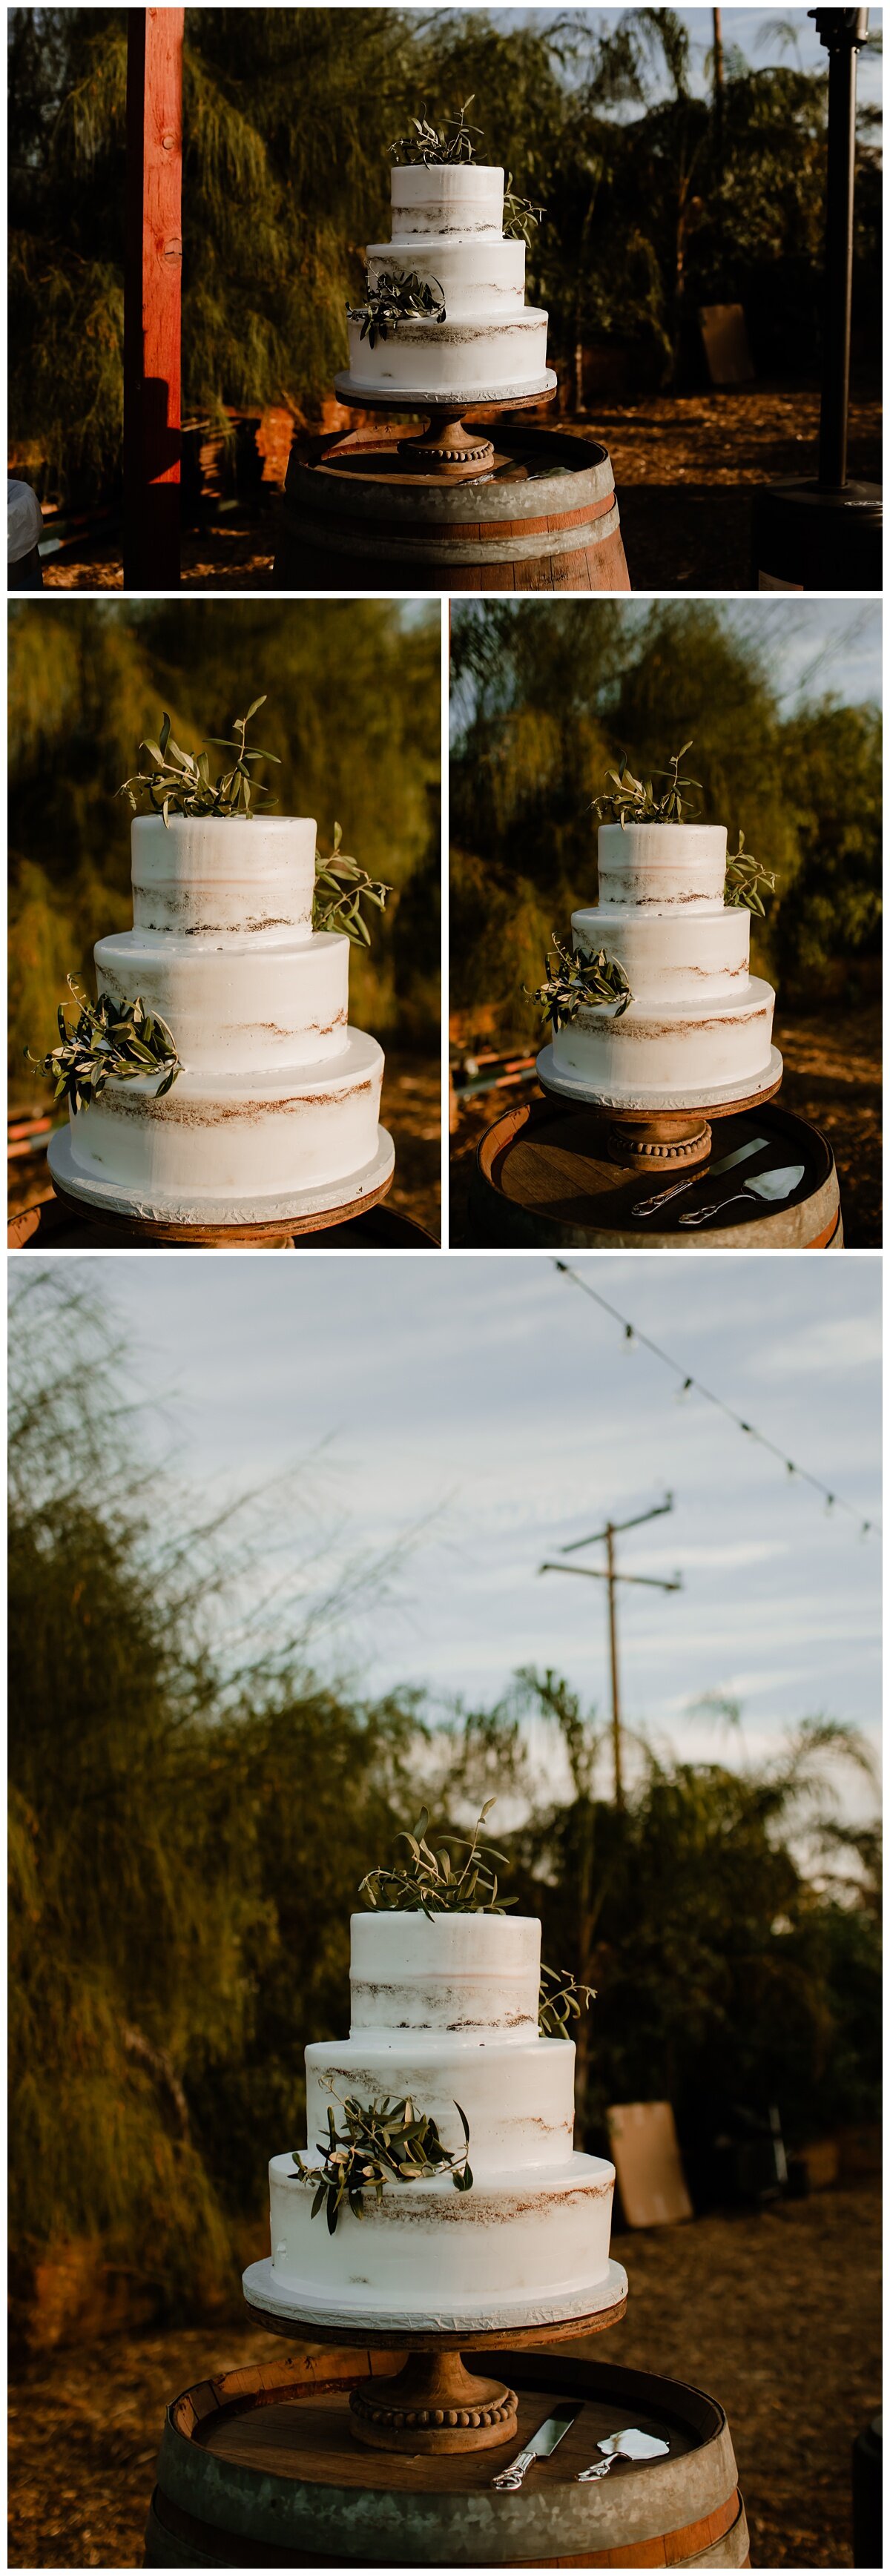 Erika and Tony - Lake Perris, CA Rustic Wedding - Eve Rox Photography-492_WEB.jpg